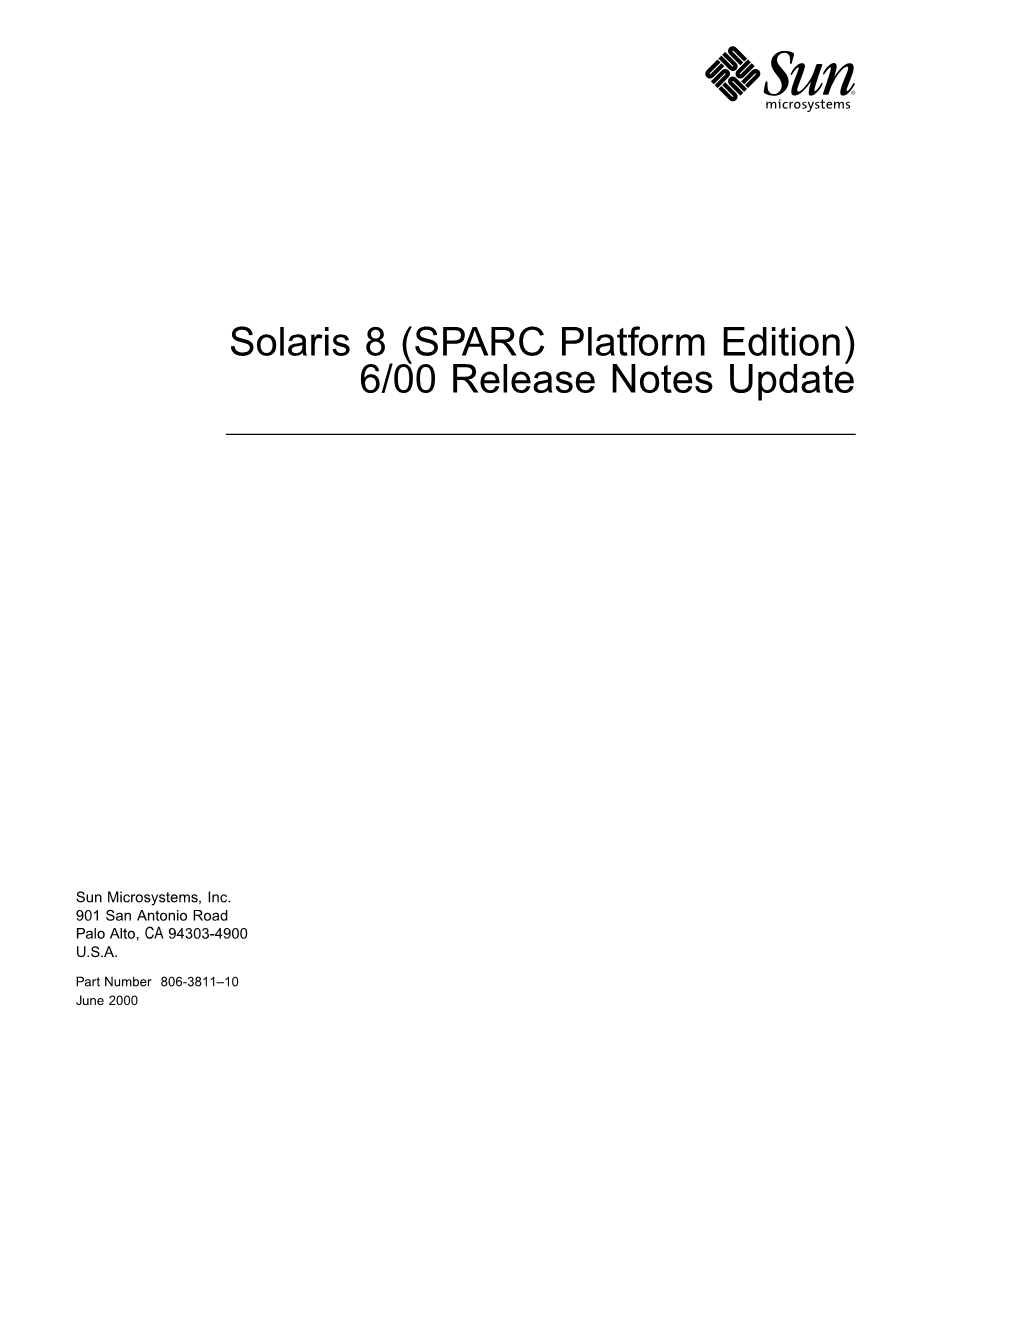 Solaris 8 (SPARC Platform Edition) 6/00 Release Notes Update